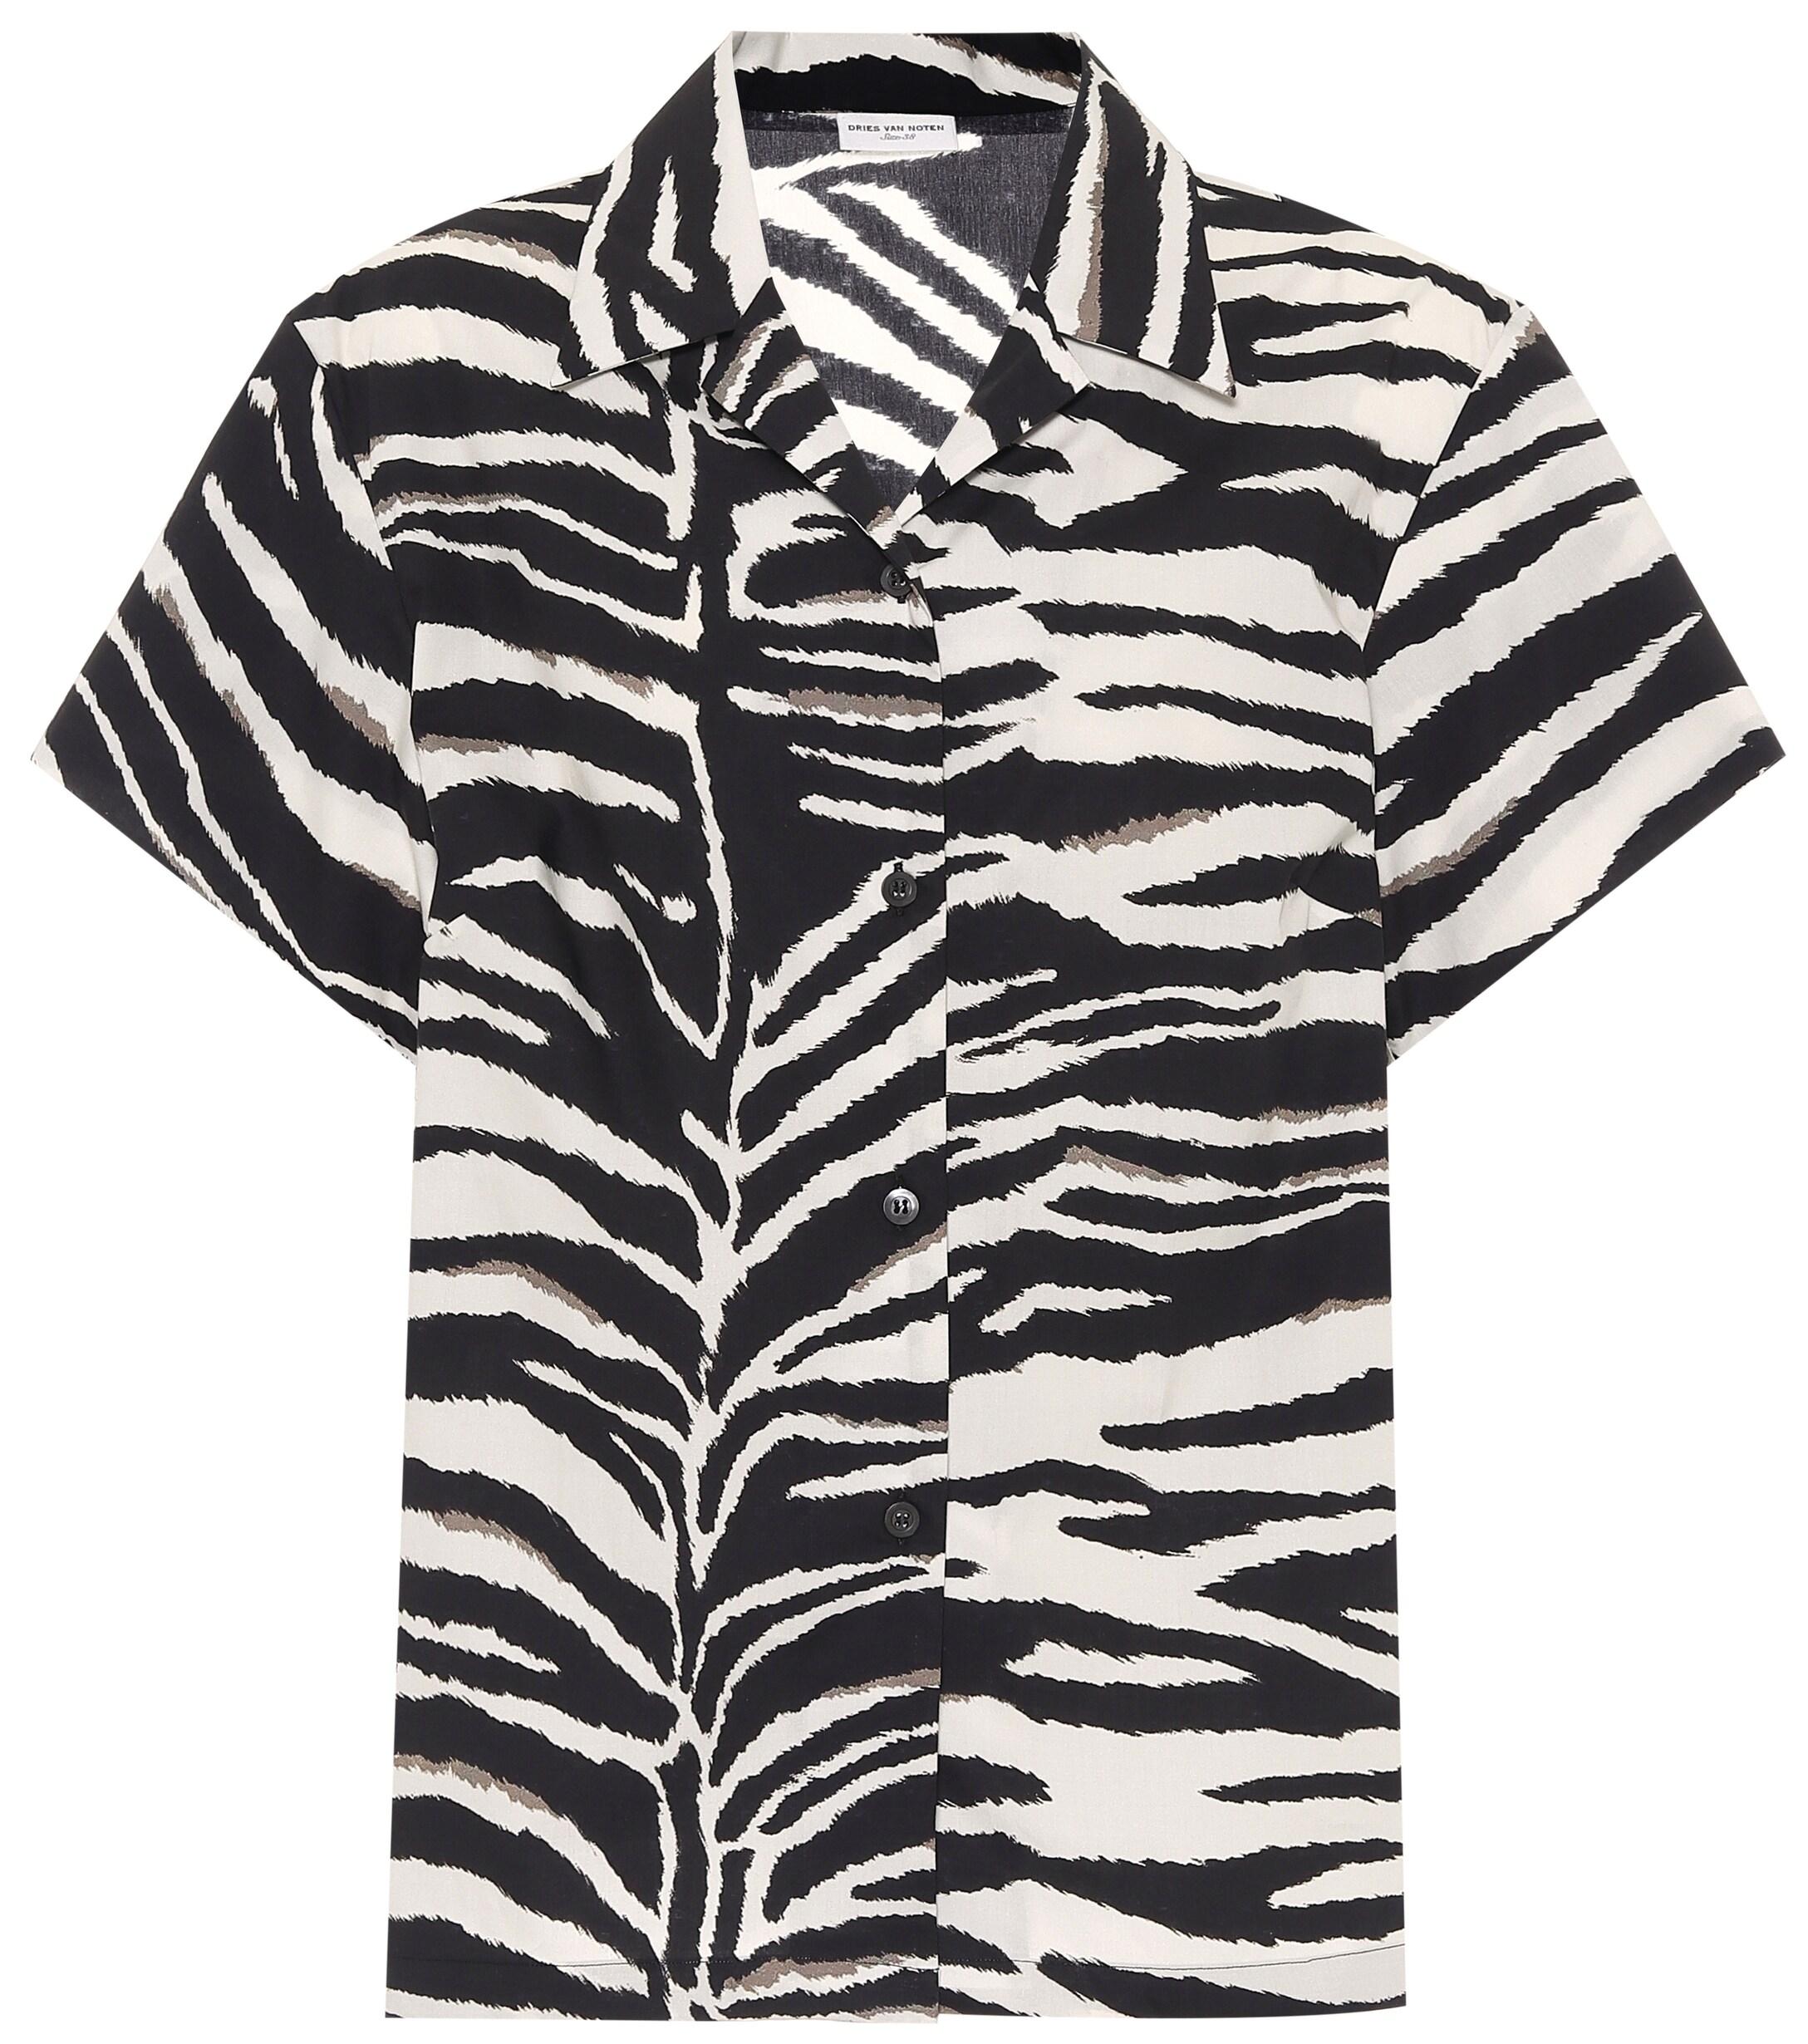 Dries Van Noten Zebra-print Cotton Poplin Shirt in Black - Lyst